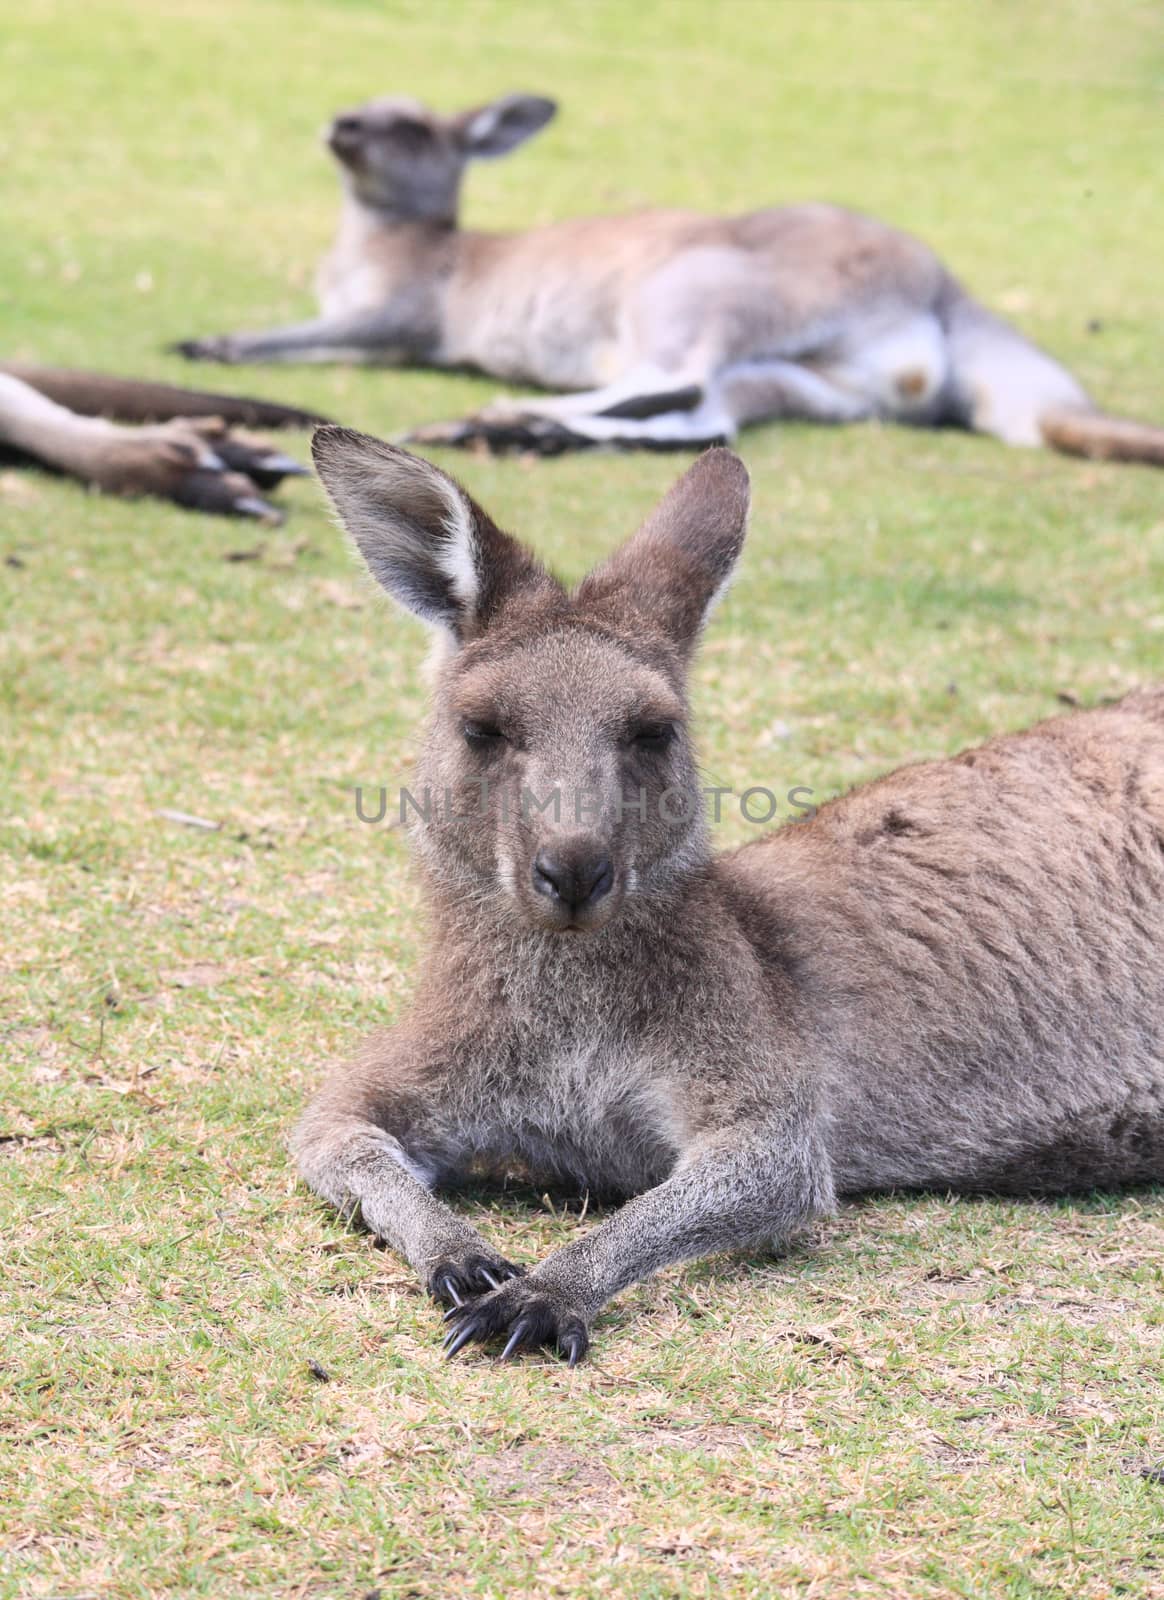 Kangaroos take a rest by lovleah